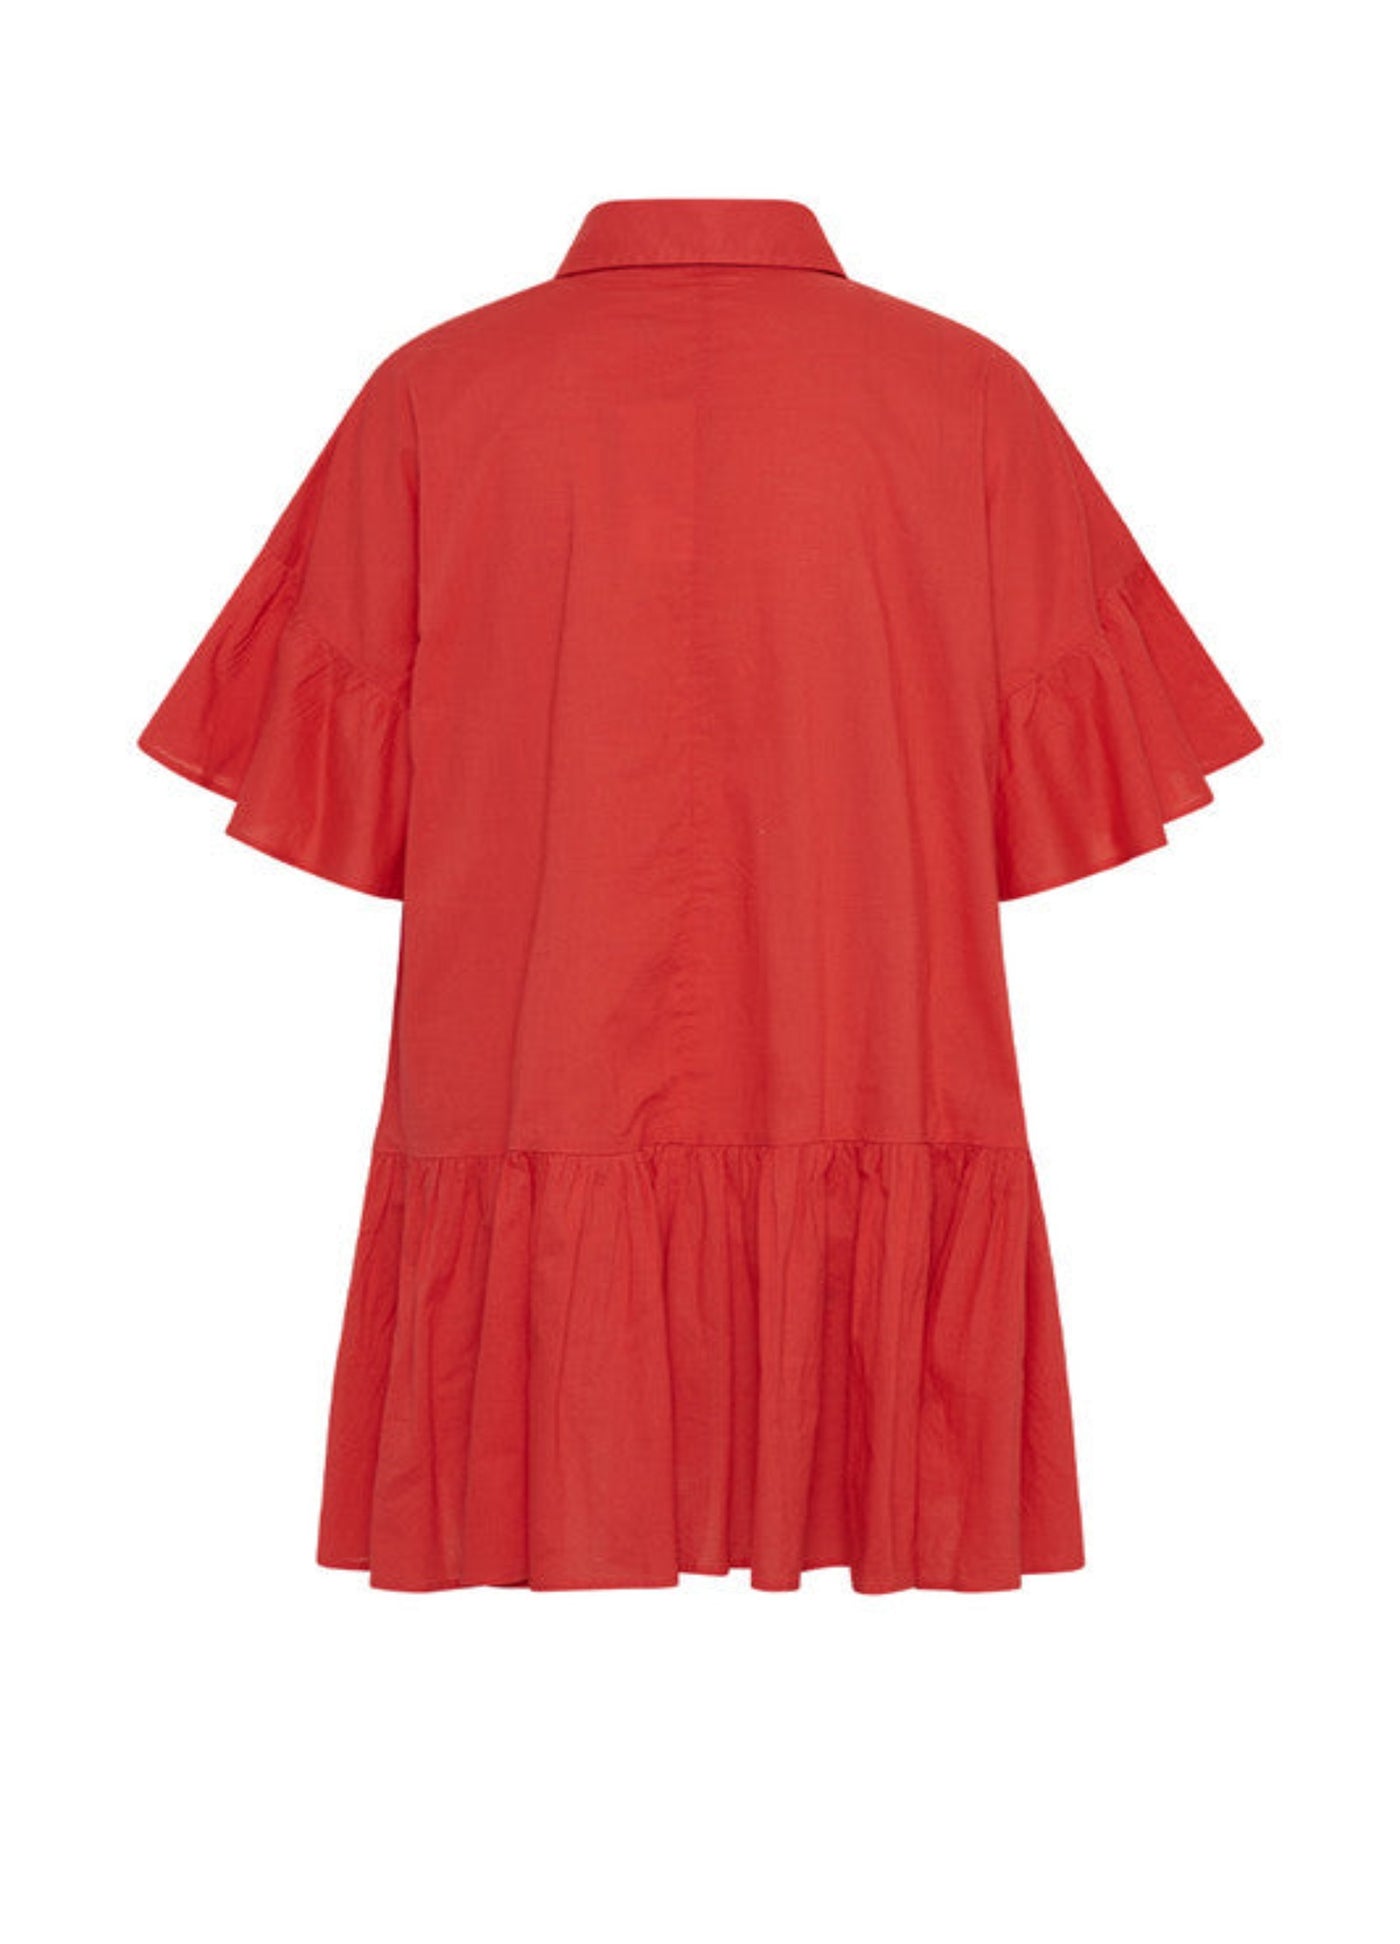 Genoa Dress in Rhubarb